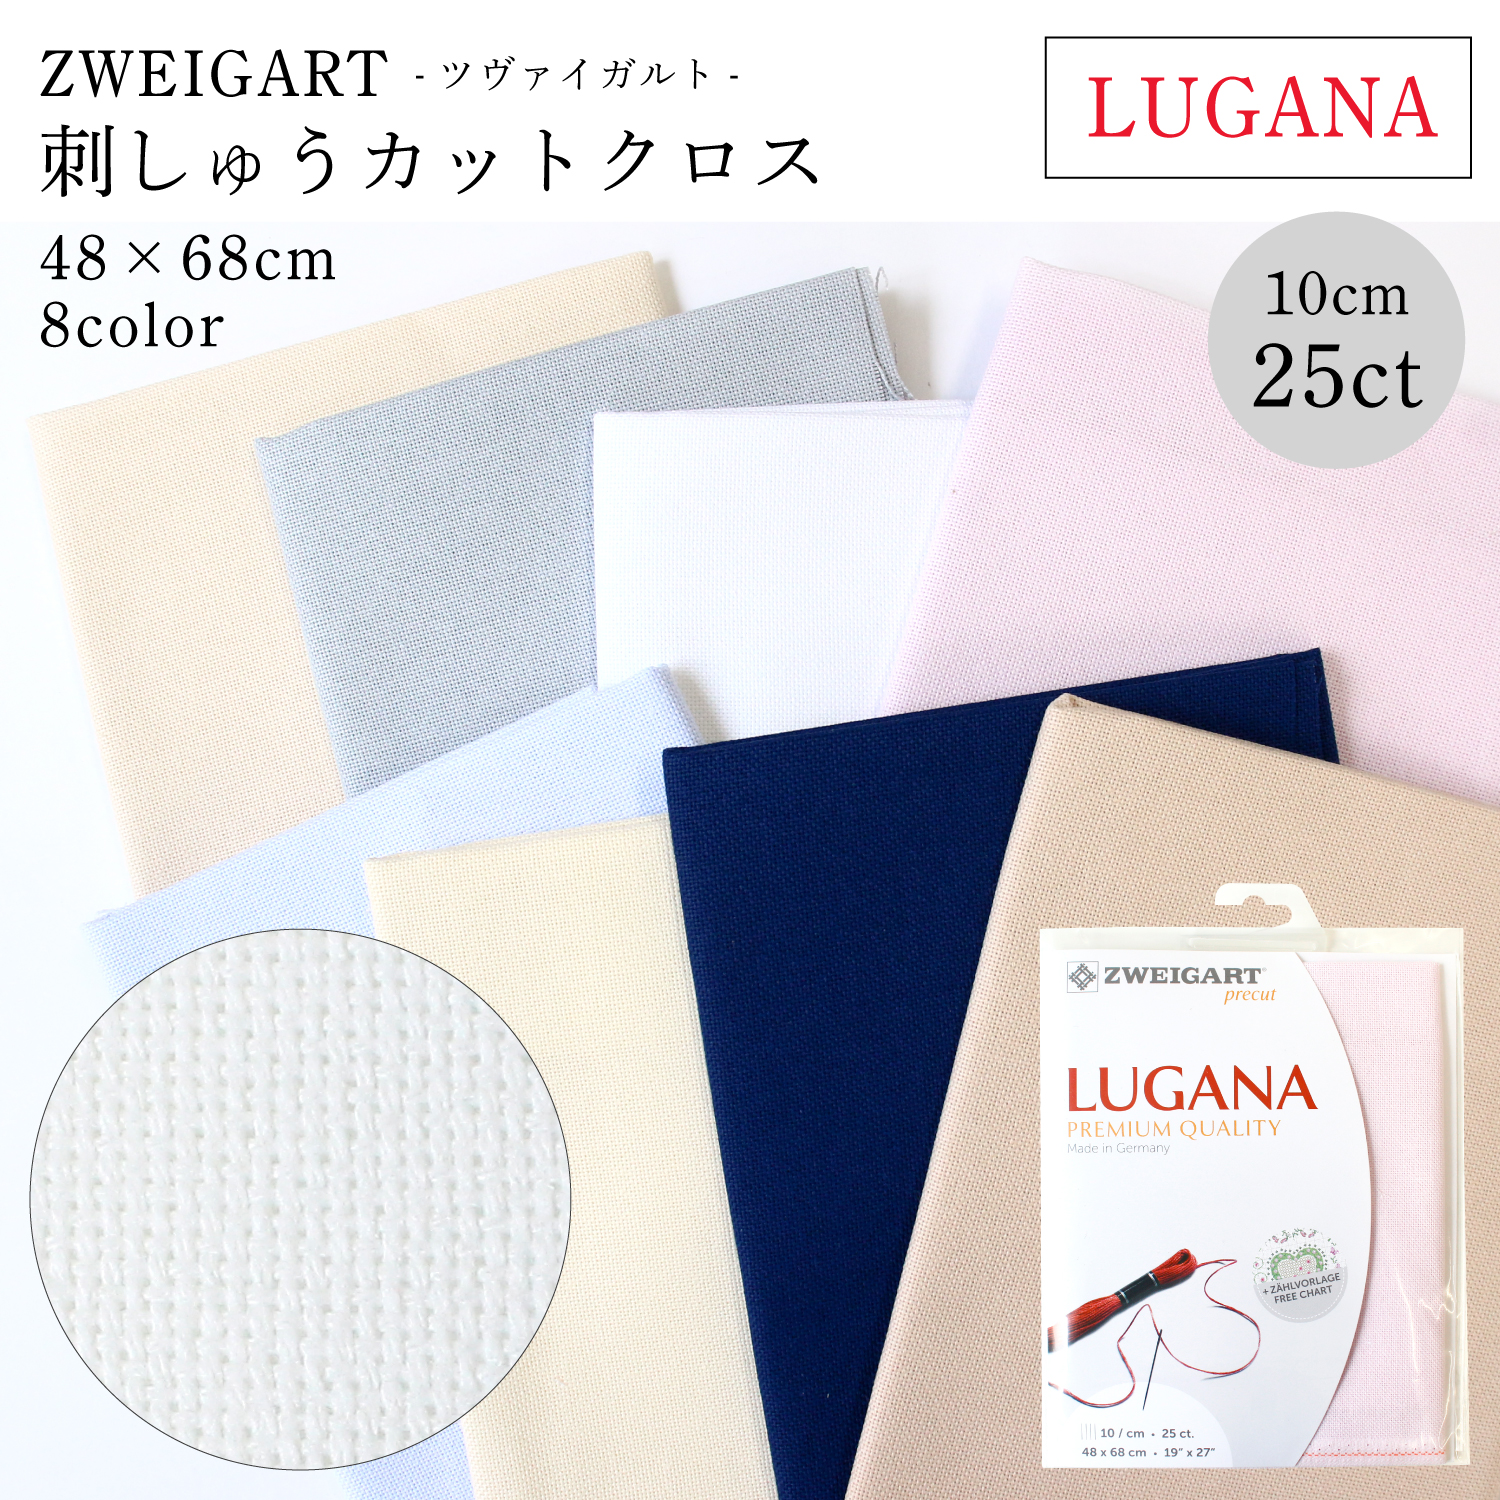 ZW3835P ZWEIGART Embroidery Cloth 25CT LUGANA 48x68cm (bag)